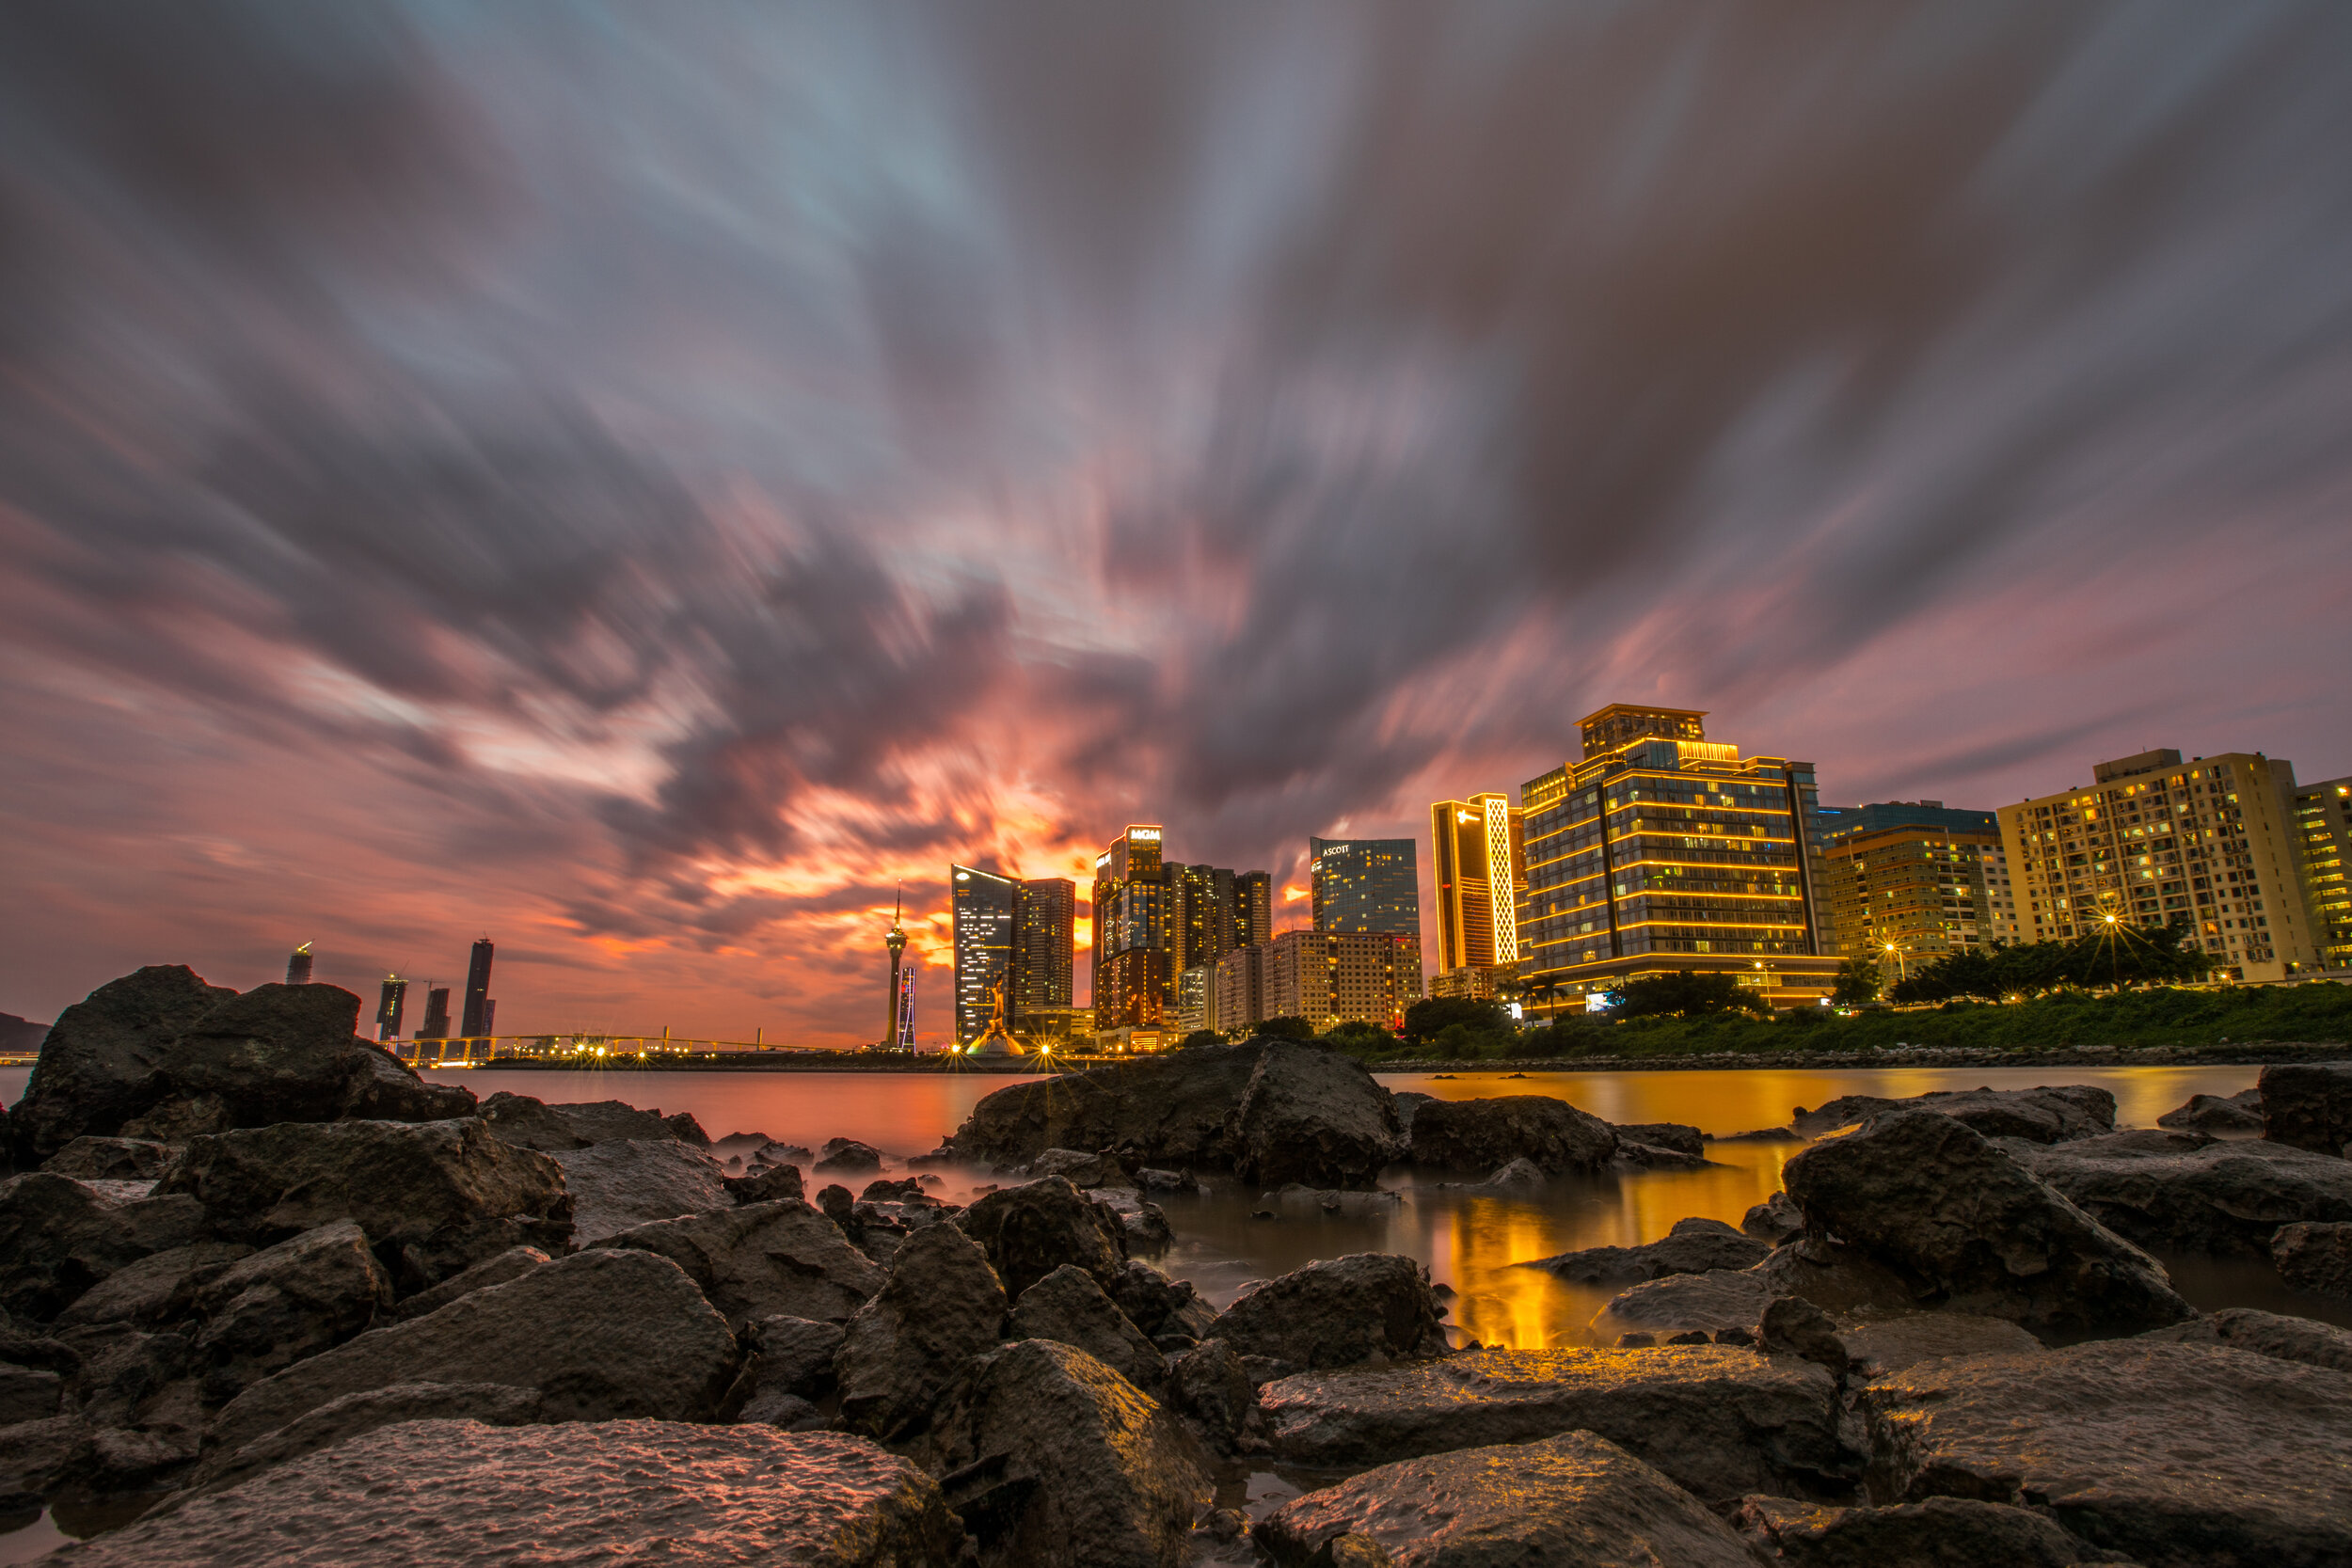 Sunset over Macau by Geraint Rowland